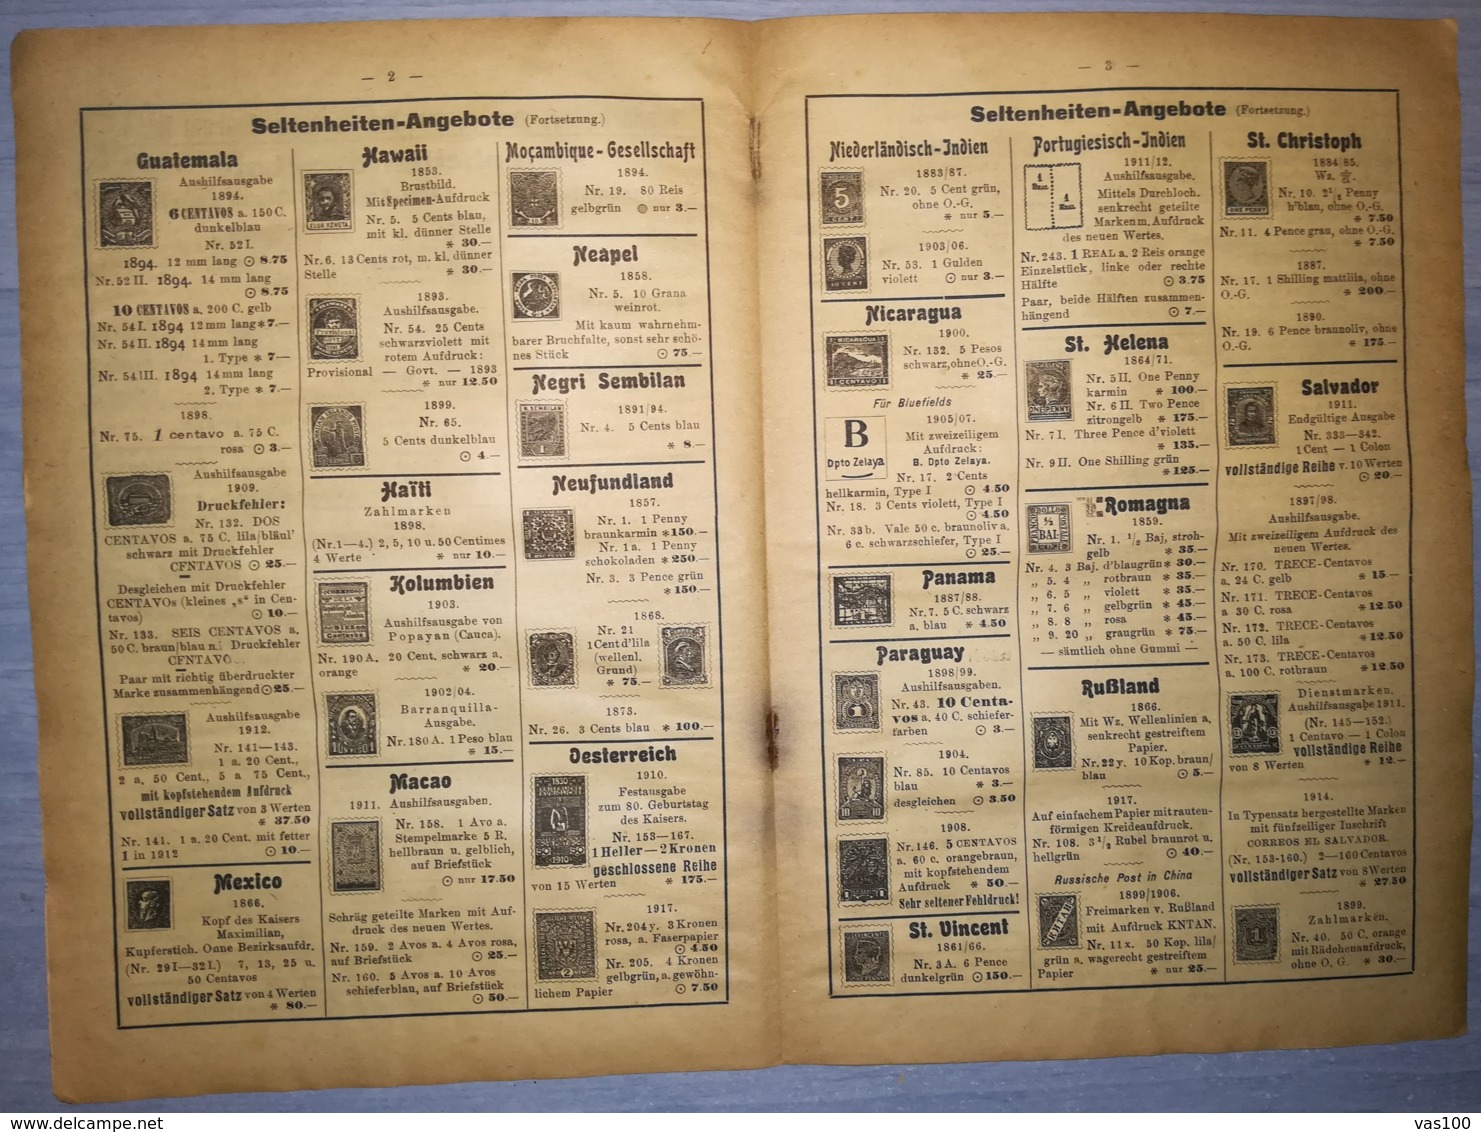 ILLUSTRATED STAMPS JOURNAL- ILLUSTRIERTES BRIEFMARKEN JOURNAL MAGAZINE, LEIPZIG, NR 4, FEBRUARY 1920, GERMANY - Allemand (jusque 1940)